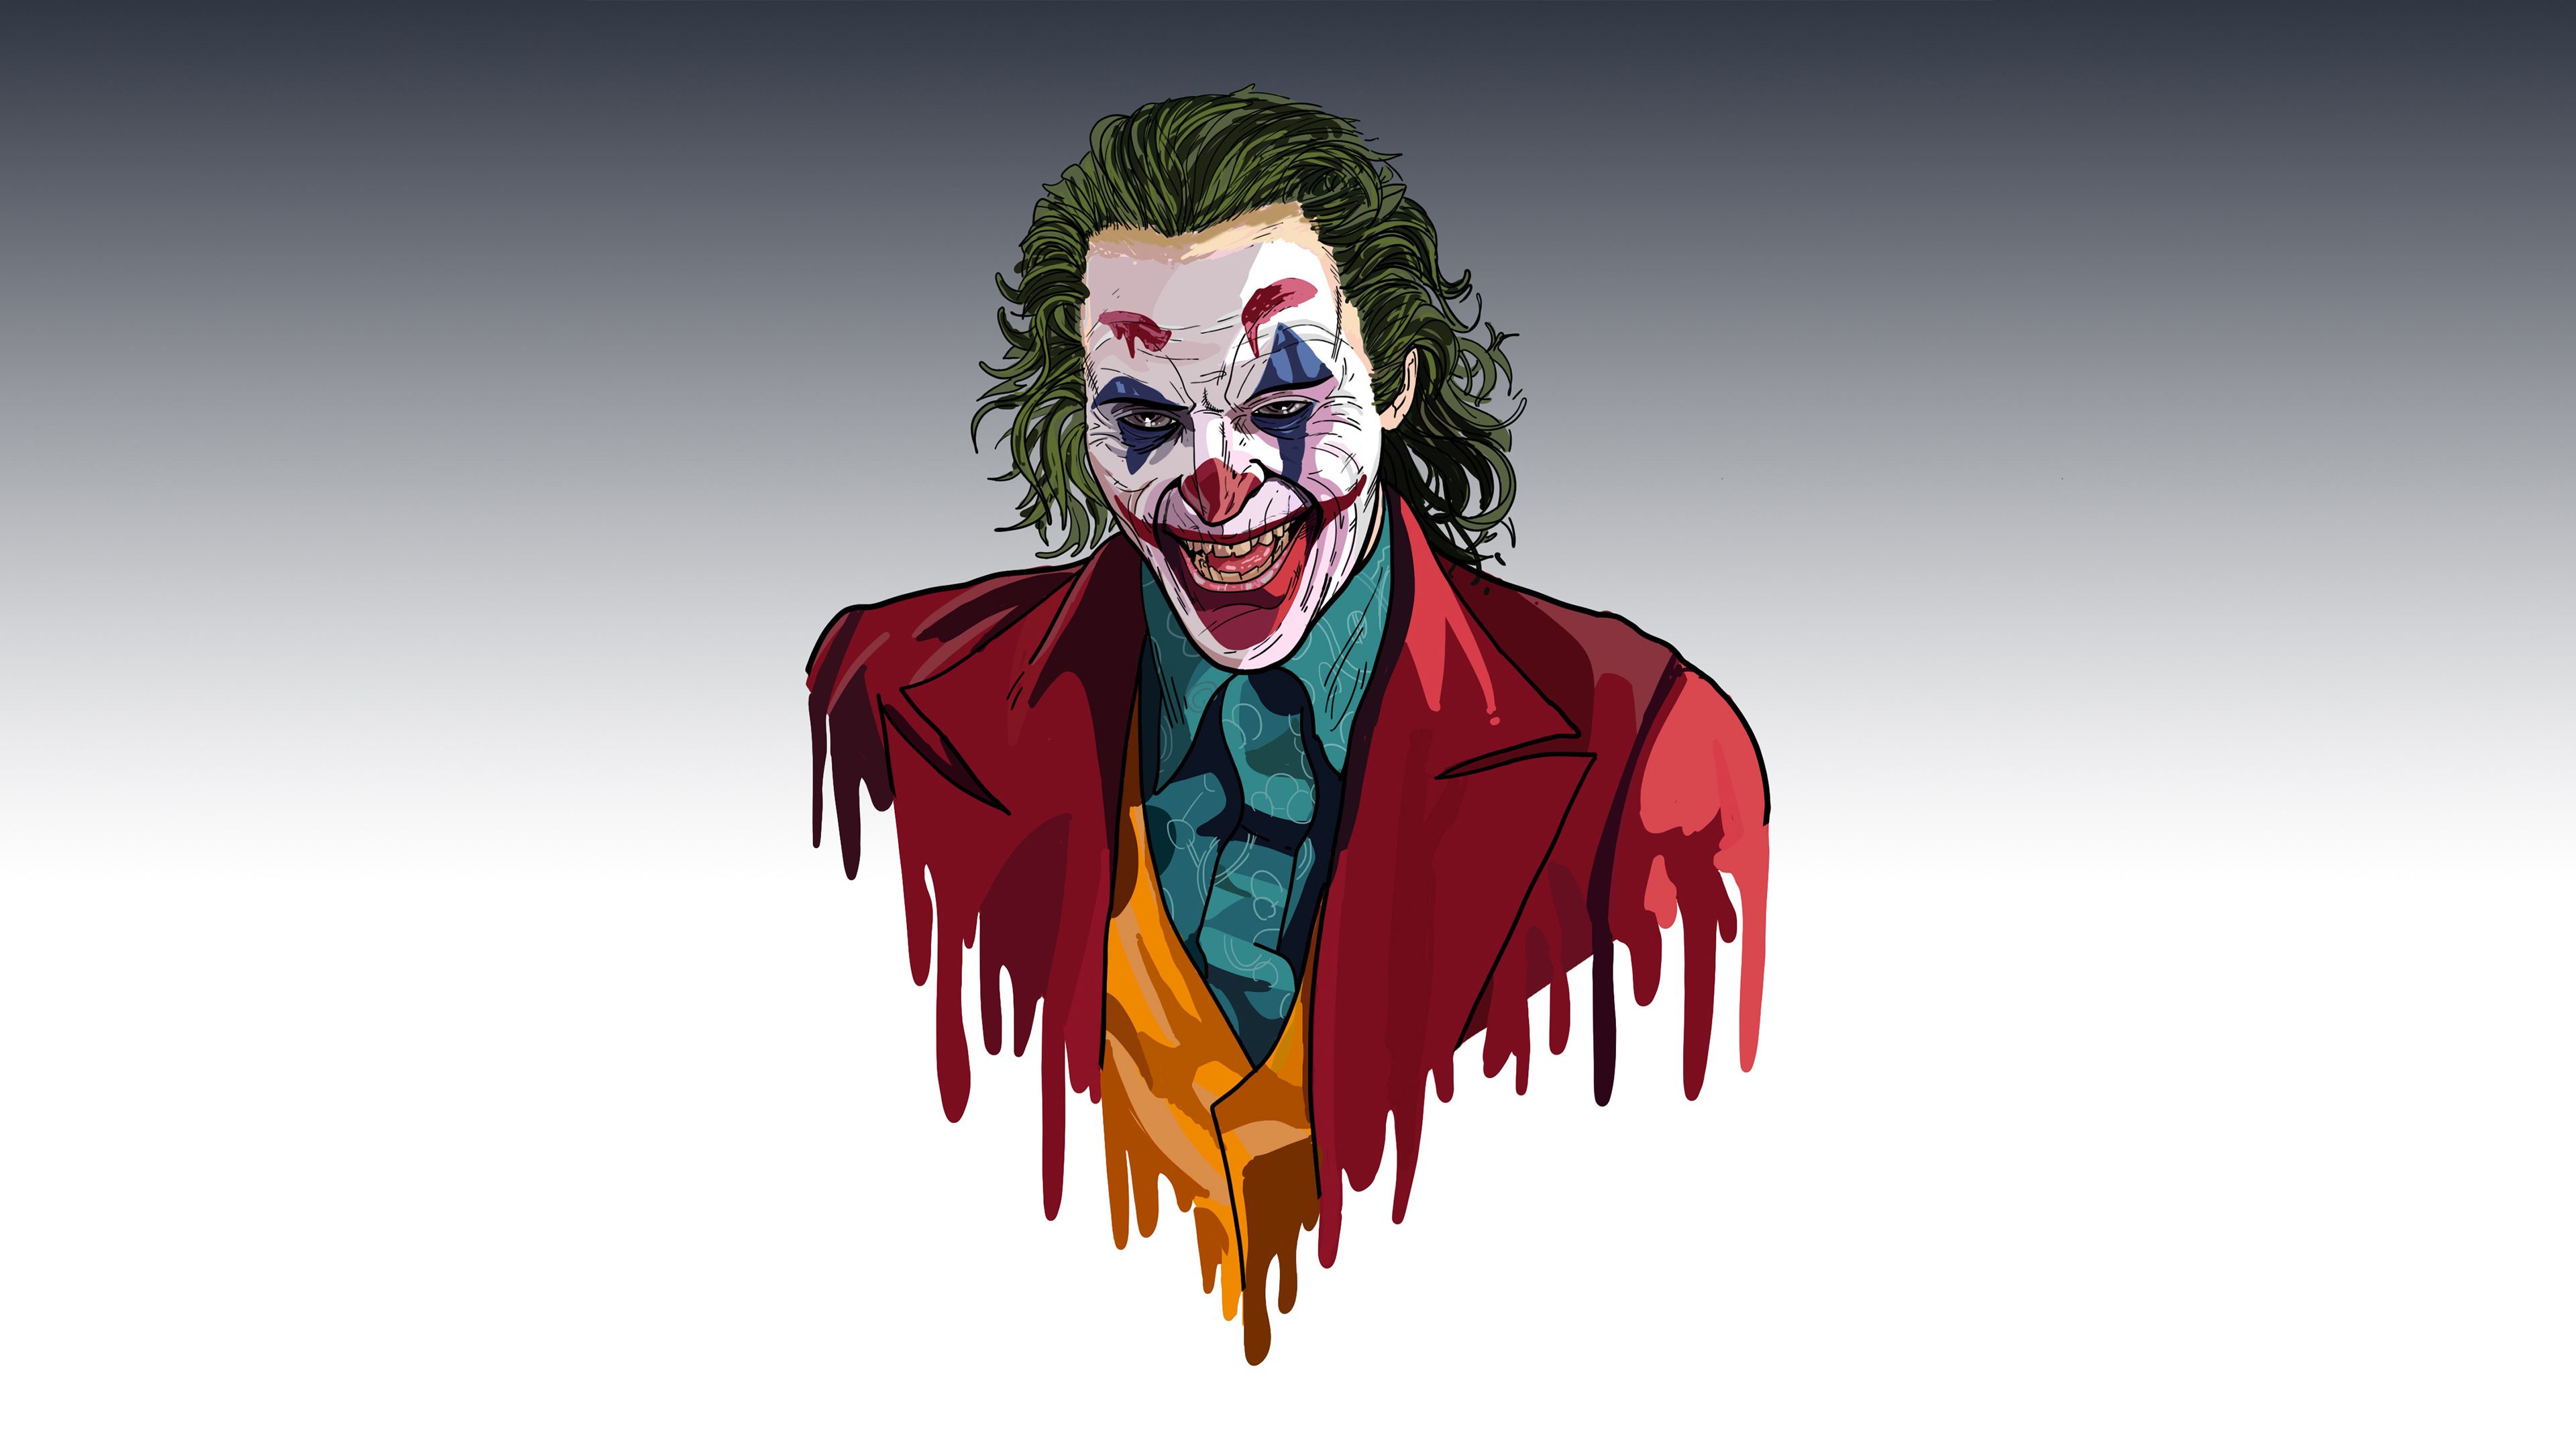 Joker 2020 4k Art, HD Superheroes, 4k Wallpaper, Image, Background, Photo and Picture